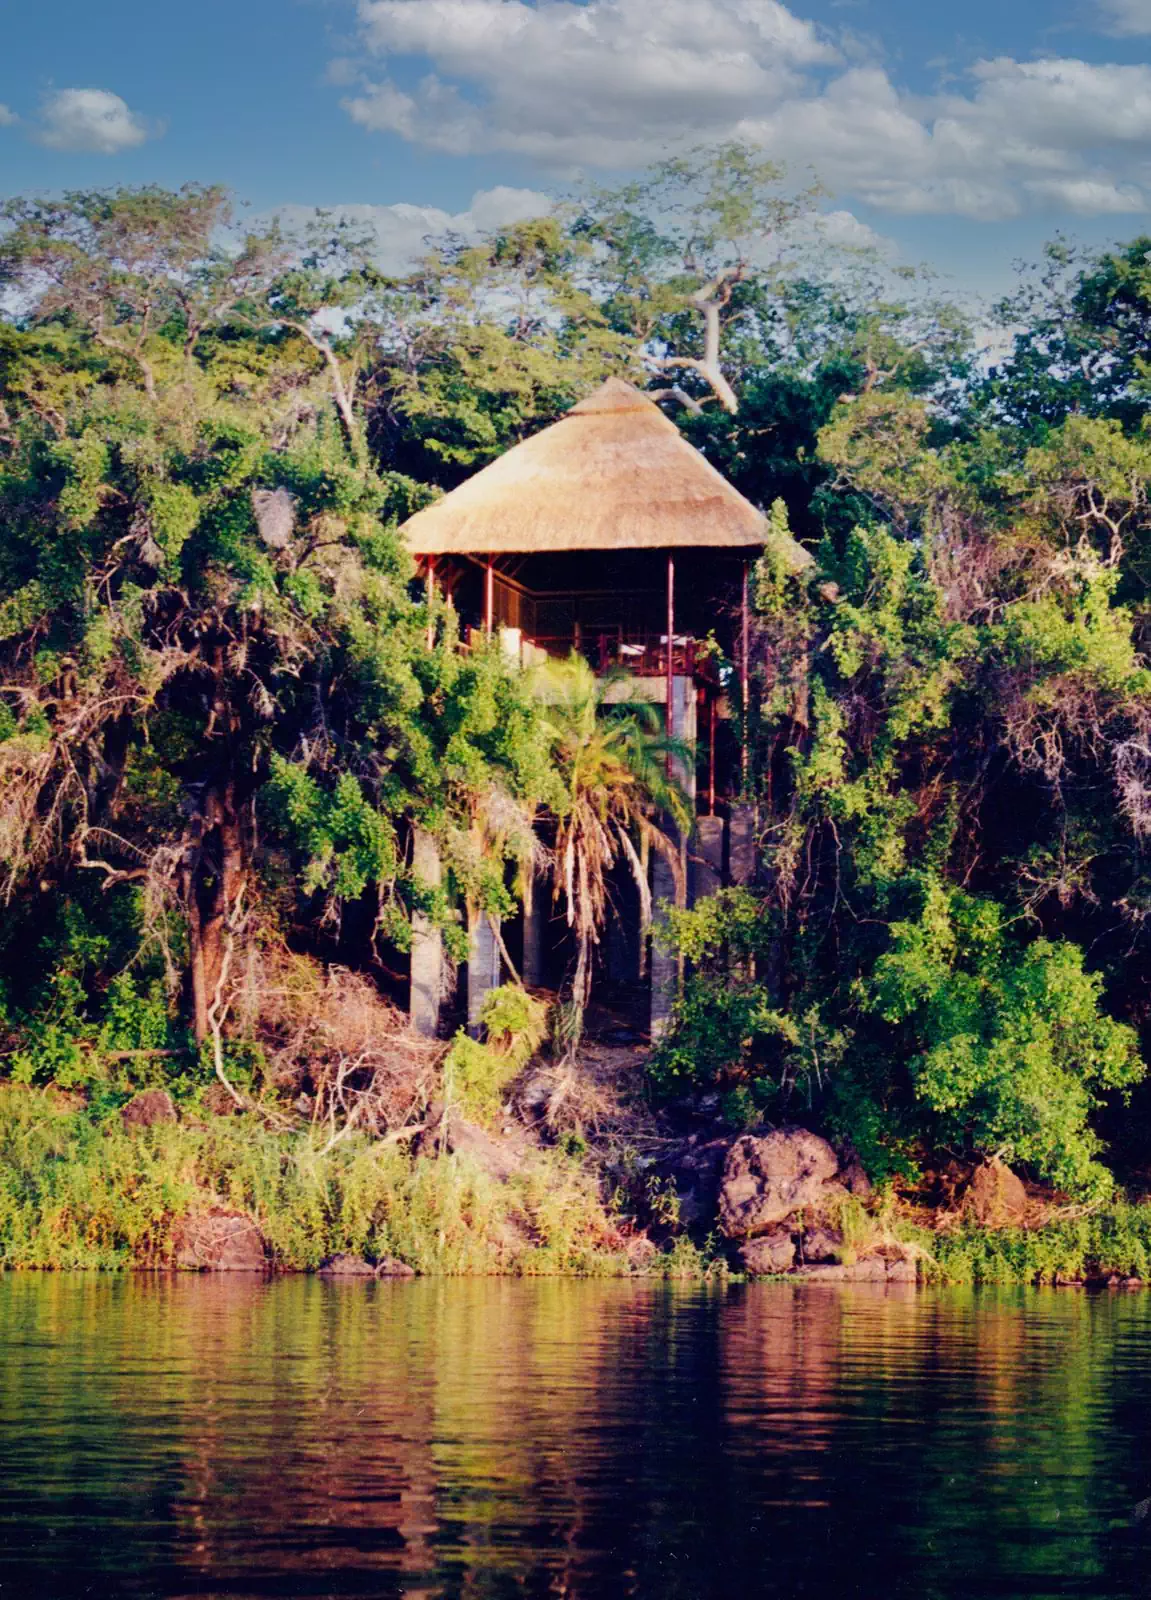 Thatched bungalow in dense vegetation on steel stilts overlooking Zambezi river designed by Zimbabwean architect